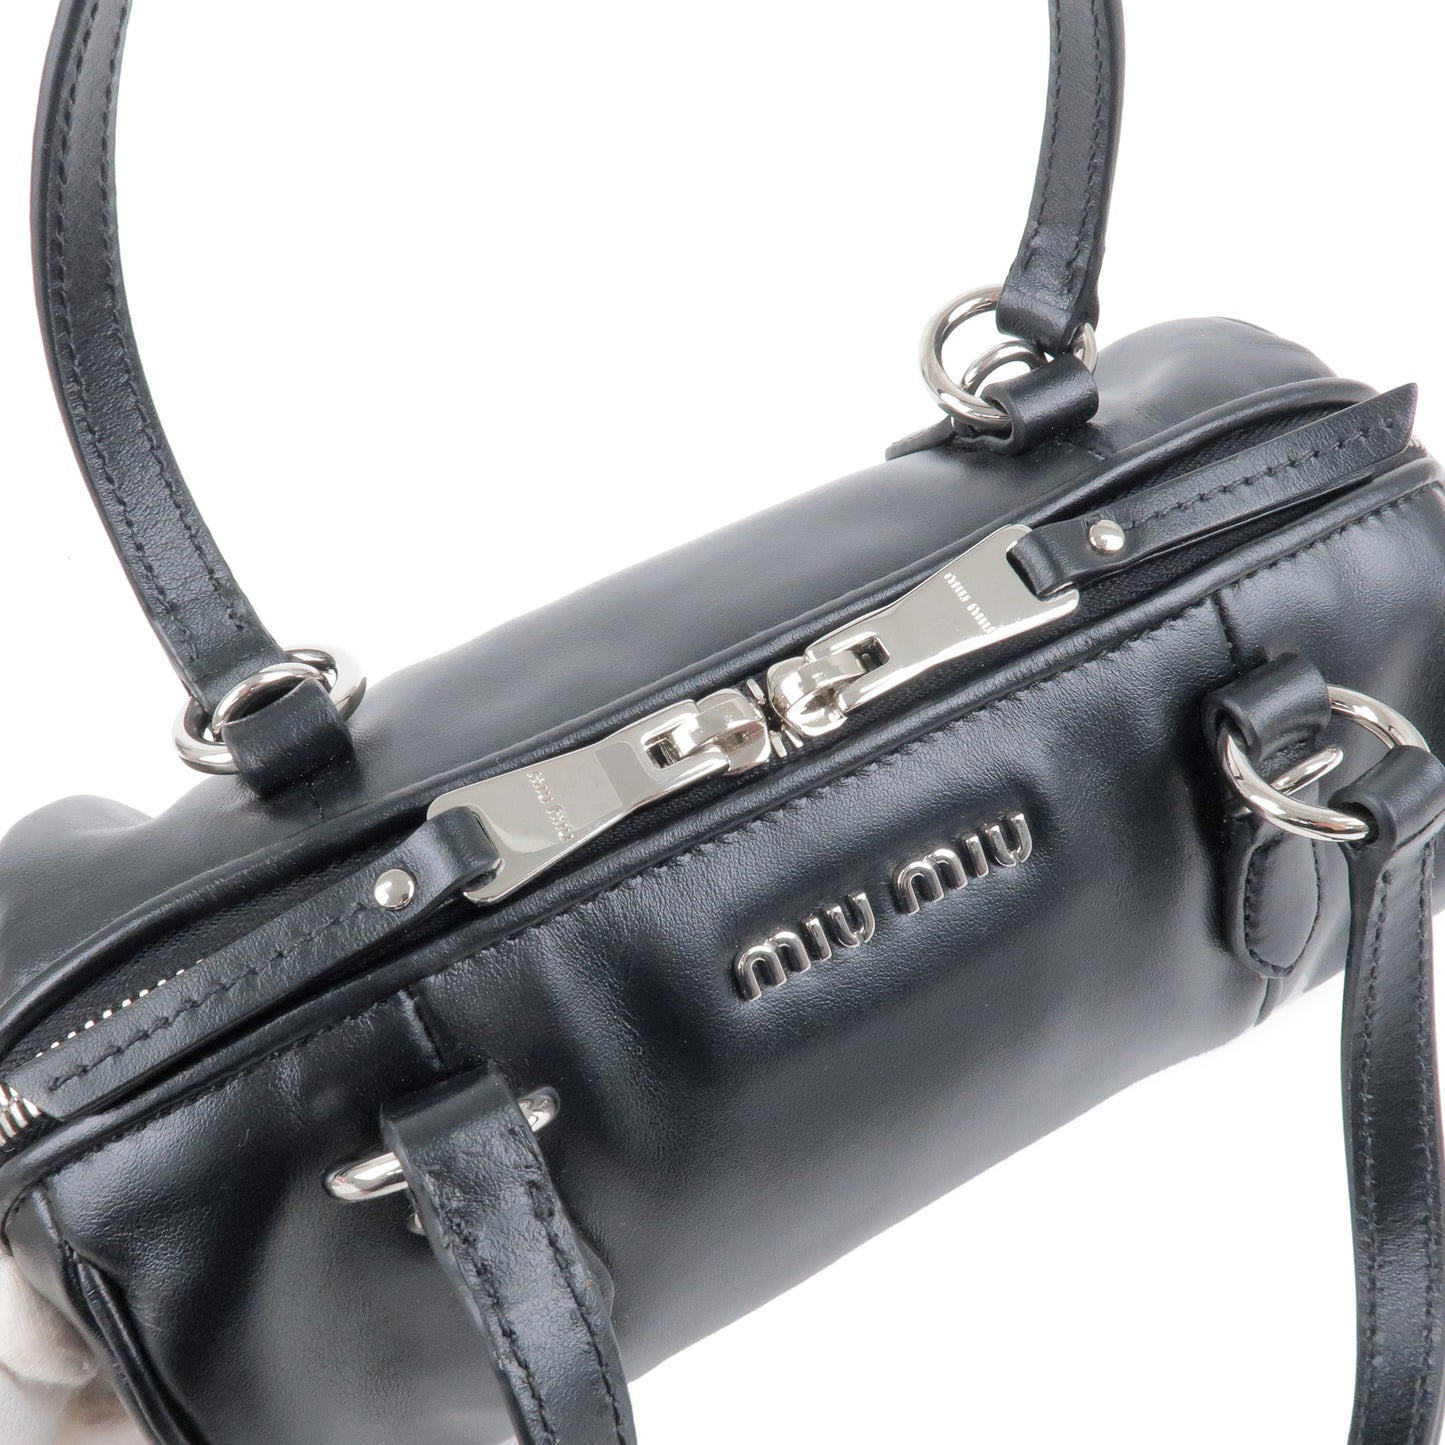 MIU MIU Logo Leather 2Way Shoulder Bag Hand Bag Black 5BH152